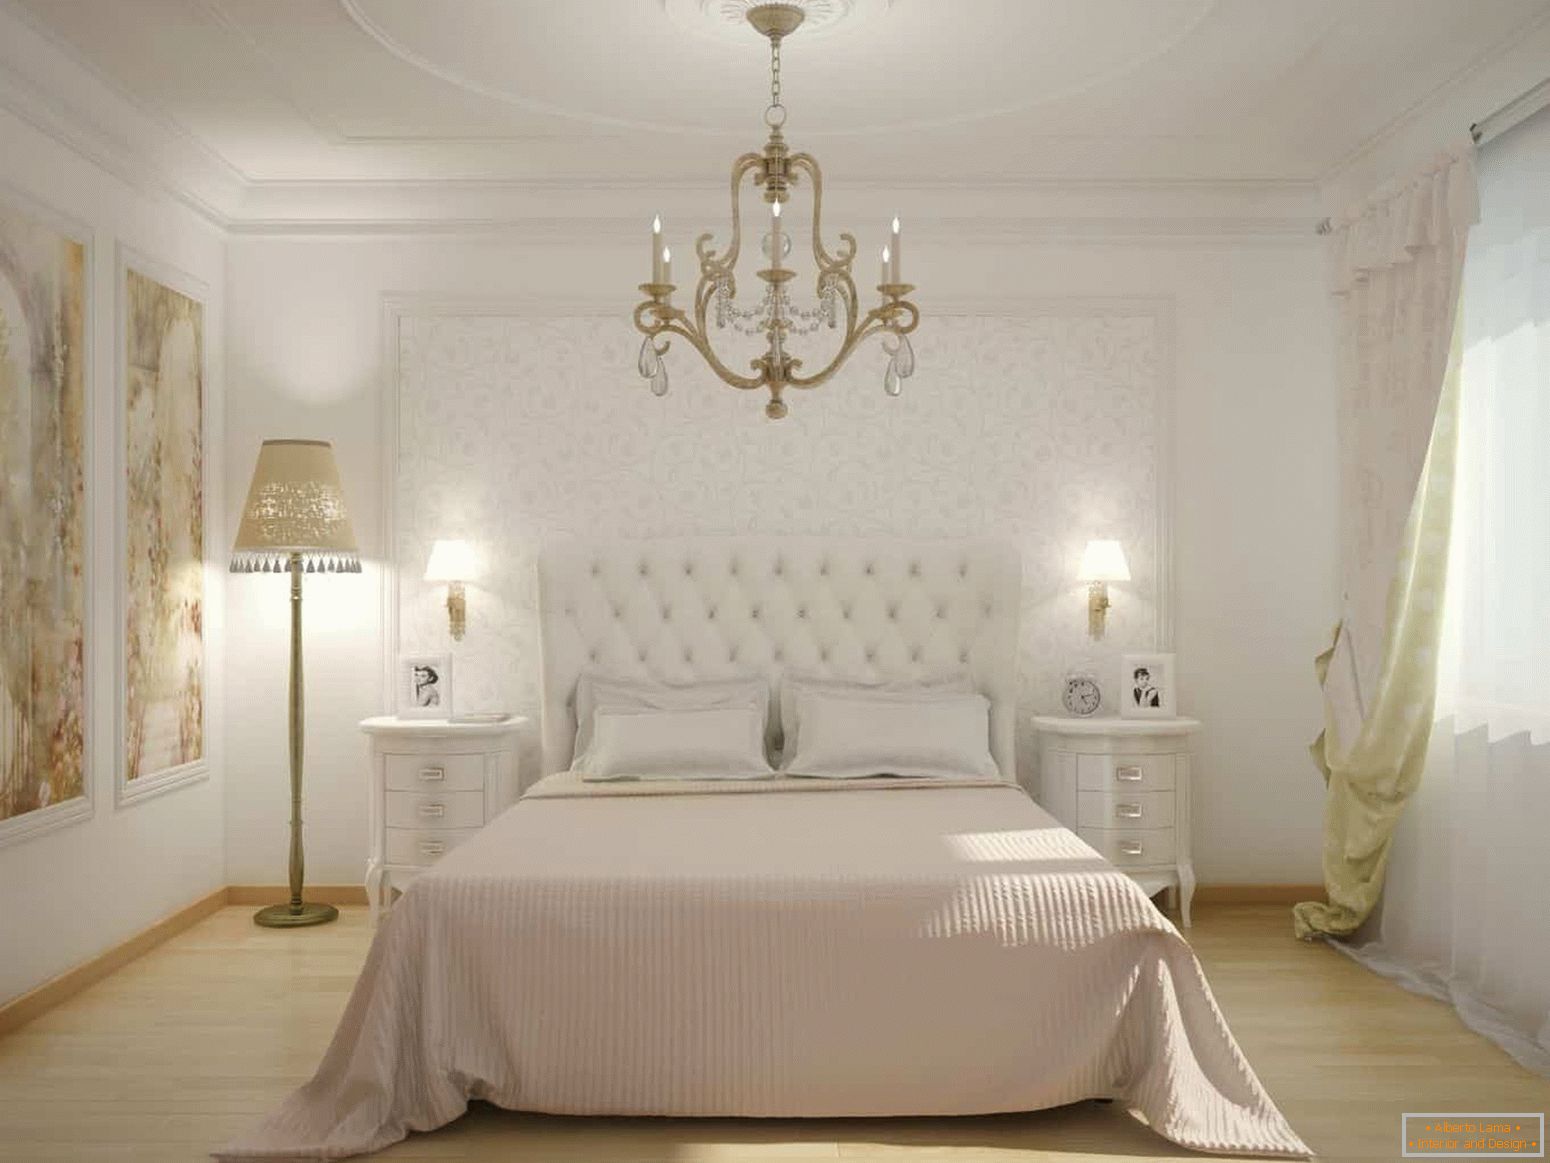 Класична бела спаваћа соба са панелом на зиду